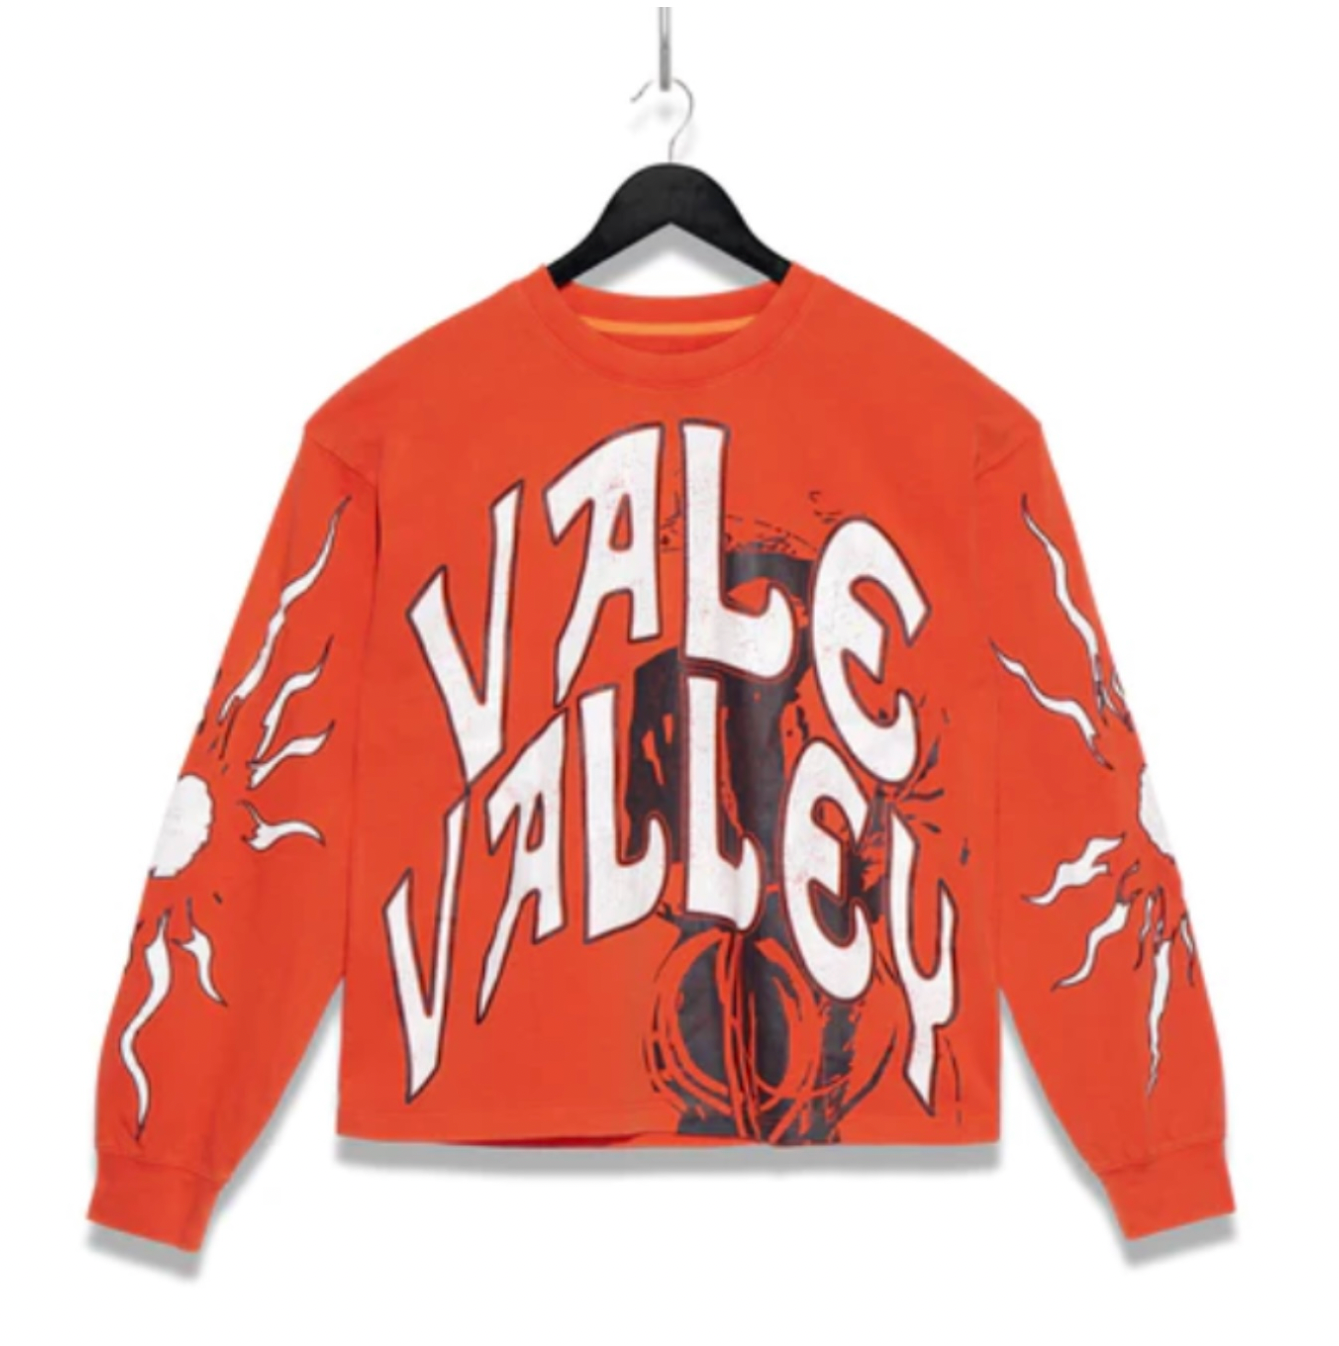 Vale Valley Orange Long Sleeve